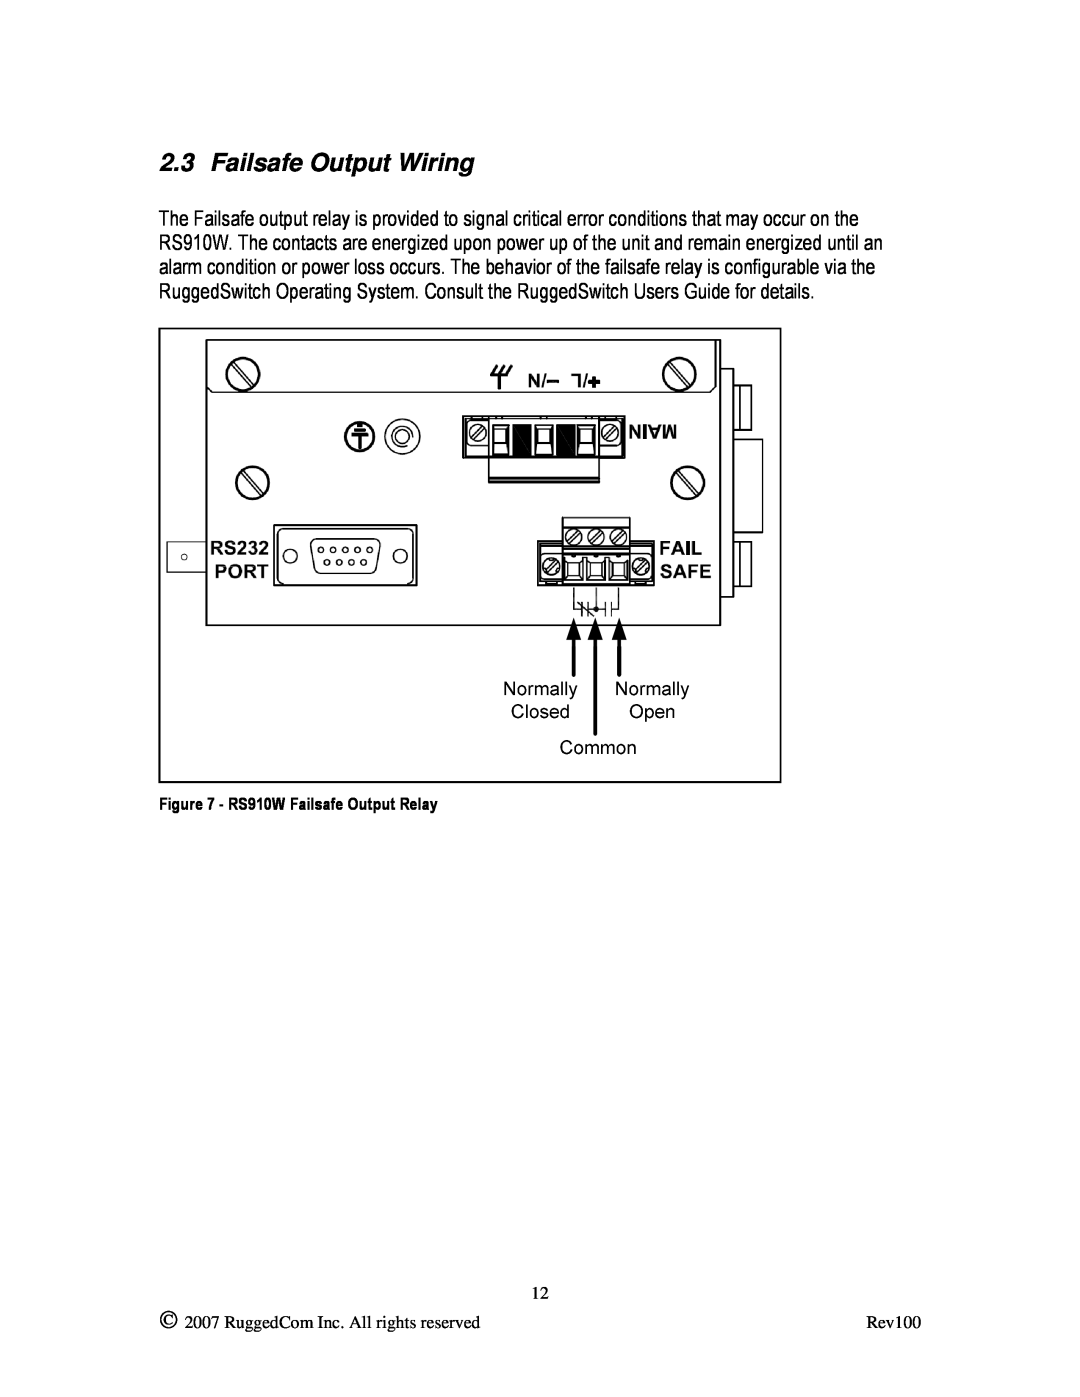 RuggedCom RS910W manual Failsafe Output Wiring 